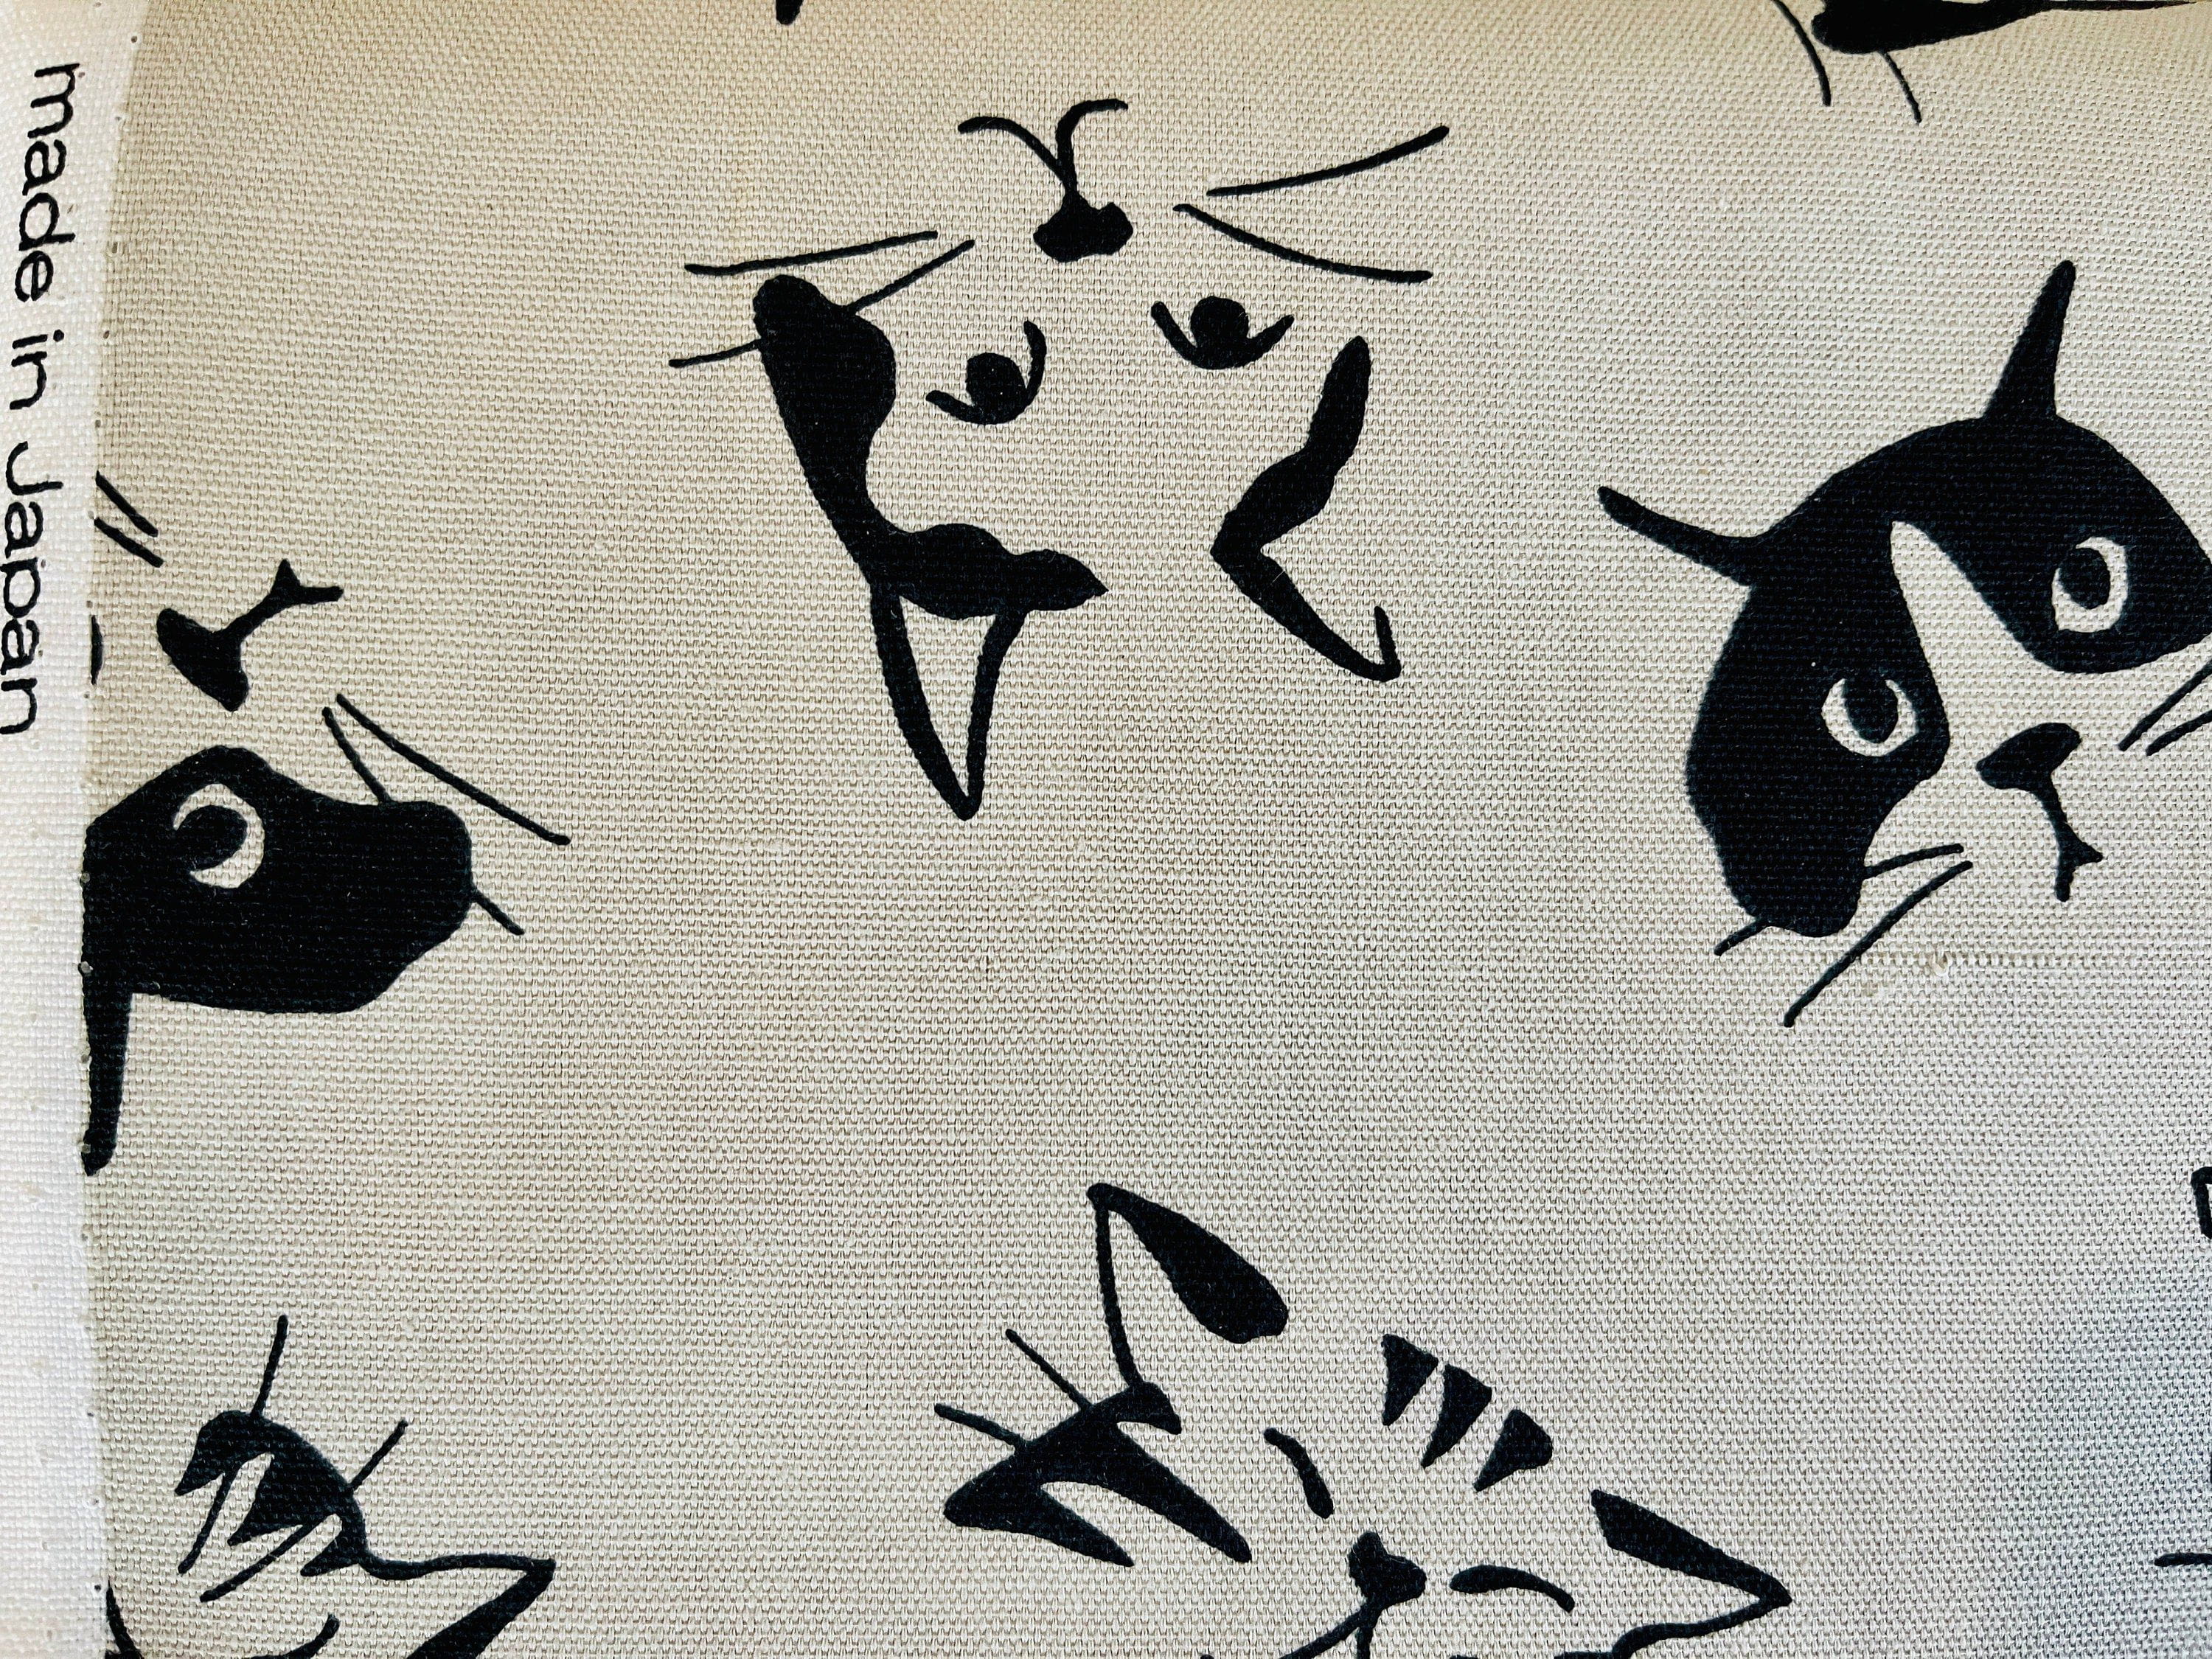 Cat - Cat Fabric - Japanese Fabric - Cotton Oxford Fabric - H-7097